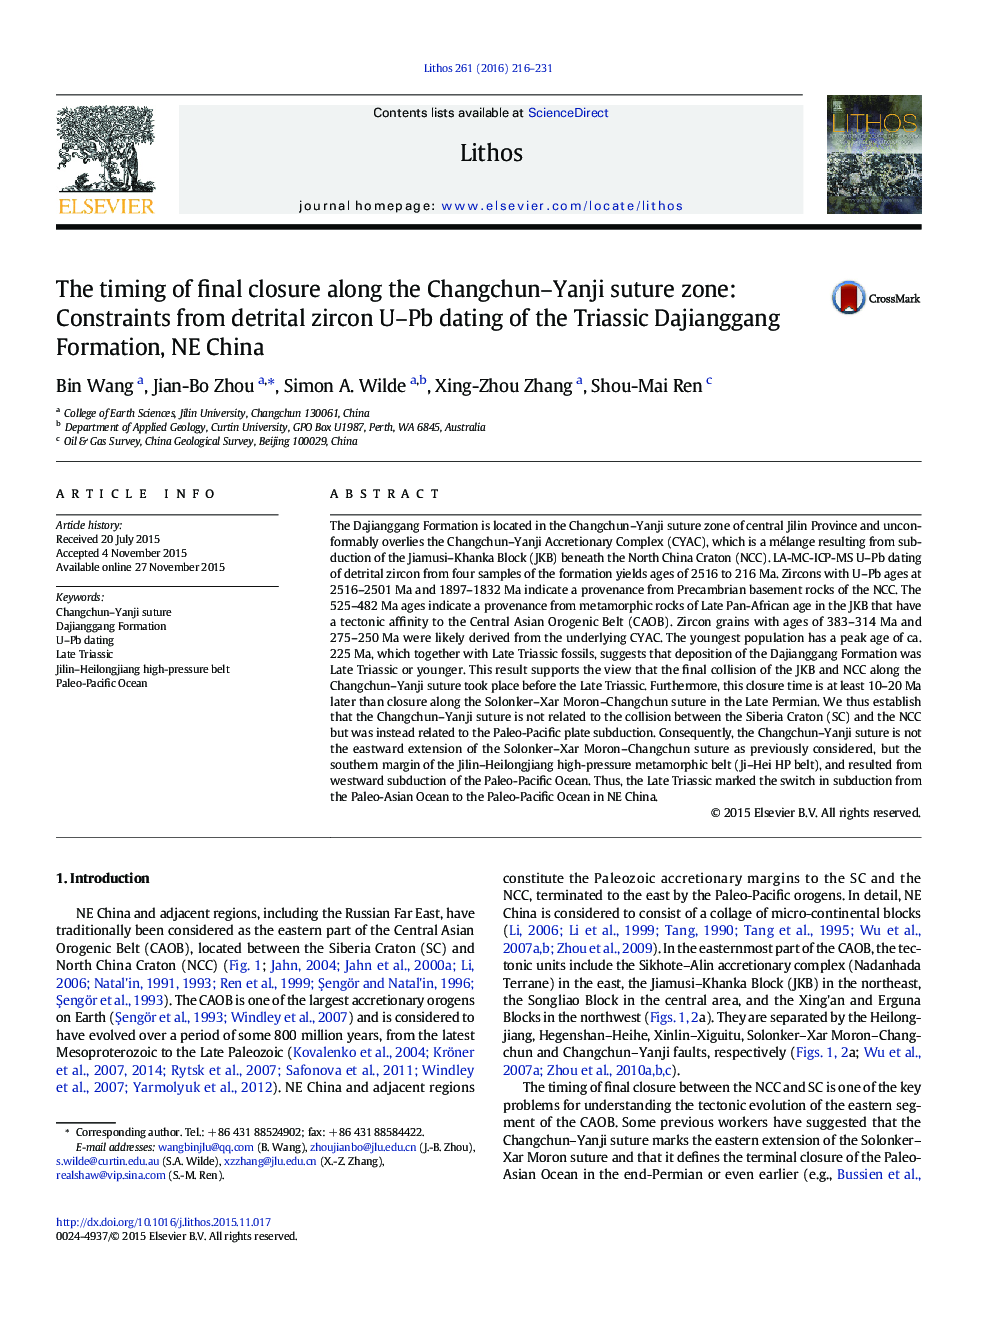 The timing of final closure along the Changchun–Yanji suture zone: Constraints from detrital zircon U–Pb dating of the Triassic Dajianggang Formation, NE China